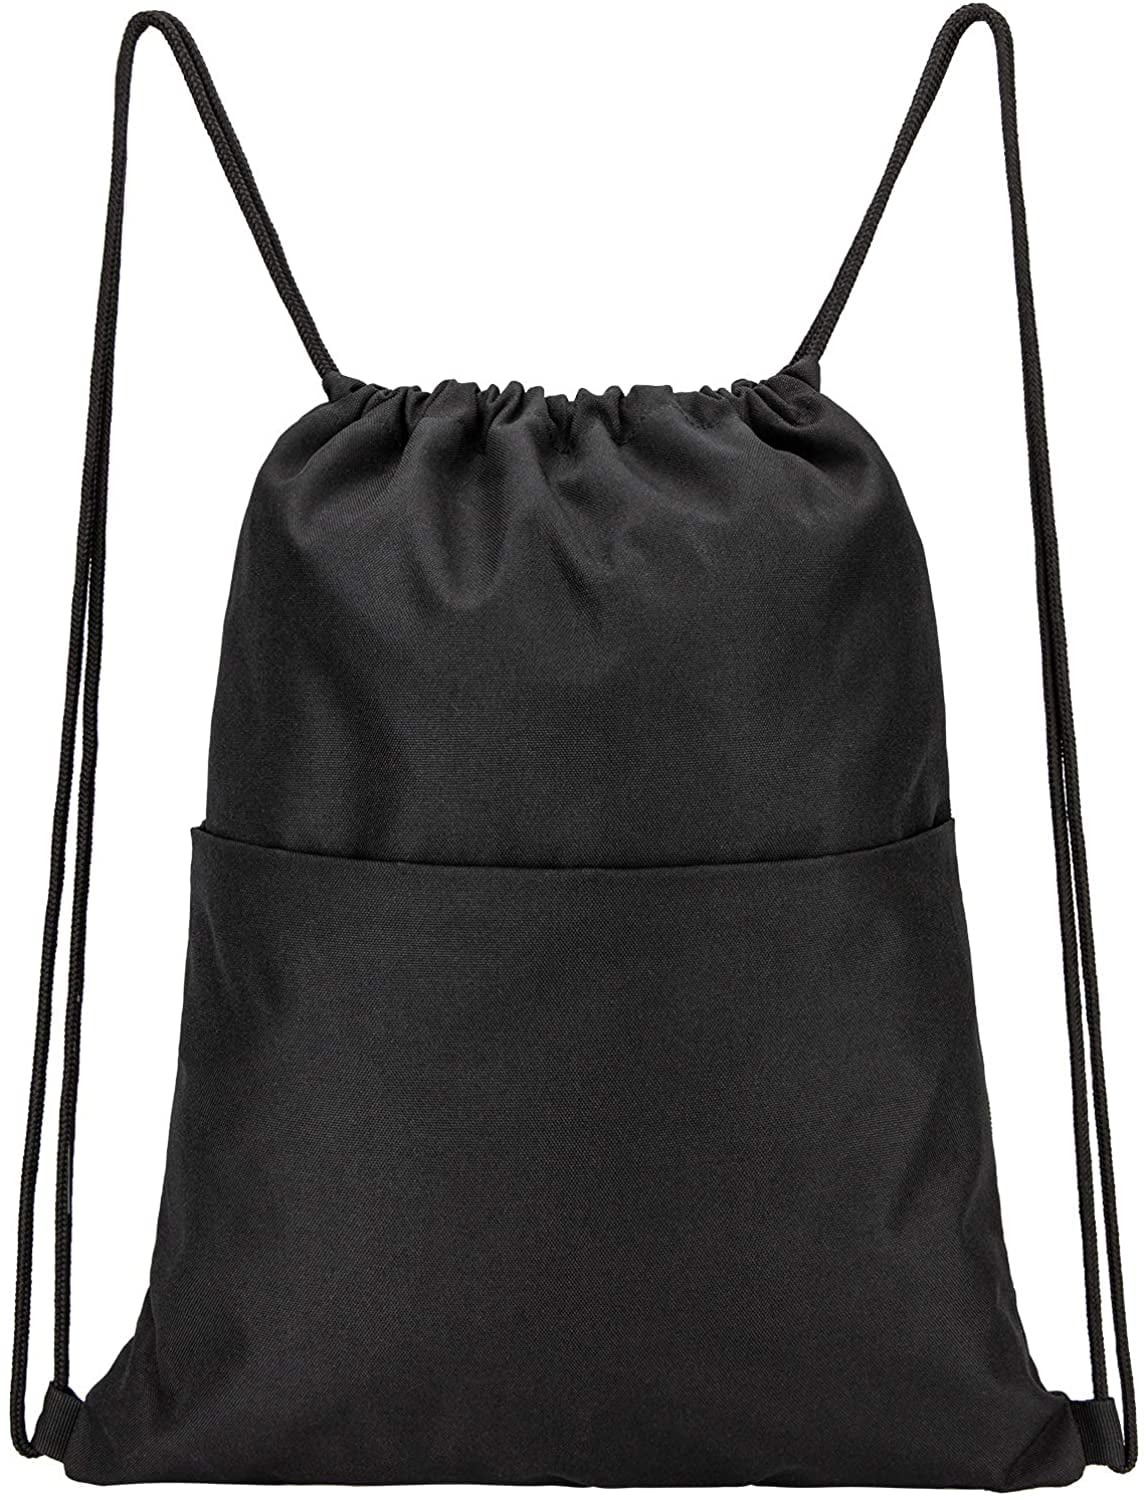 Stay Weird Print Drawstring Backpack String Bag Cinch Water Resistant Beach Bag for Gym Shopping Sport Yoga 